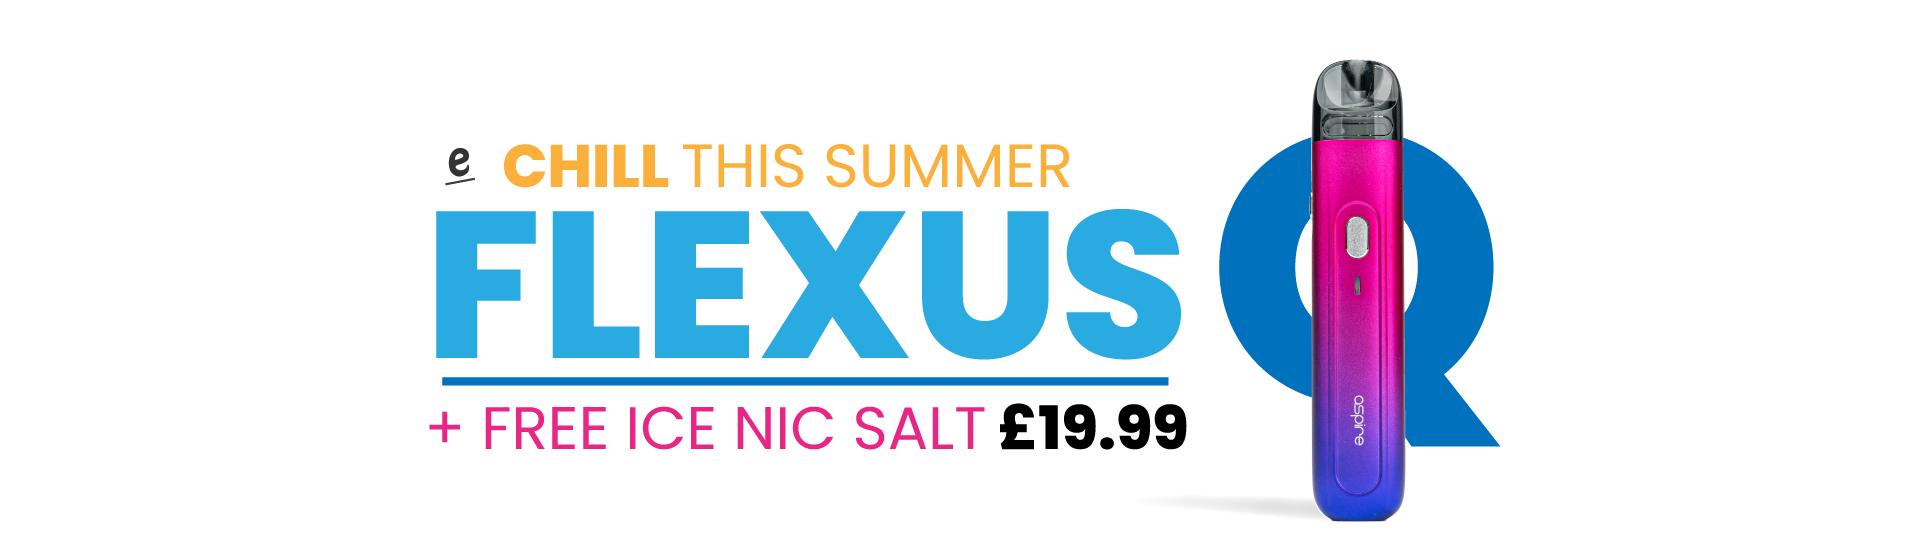 Aspire Flexus Q and a free Nic Salt just £19.99